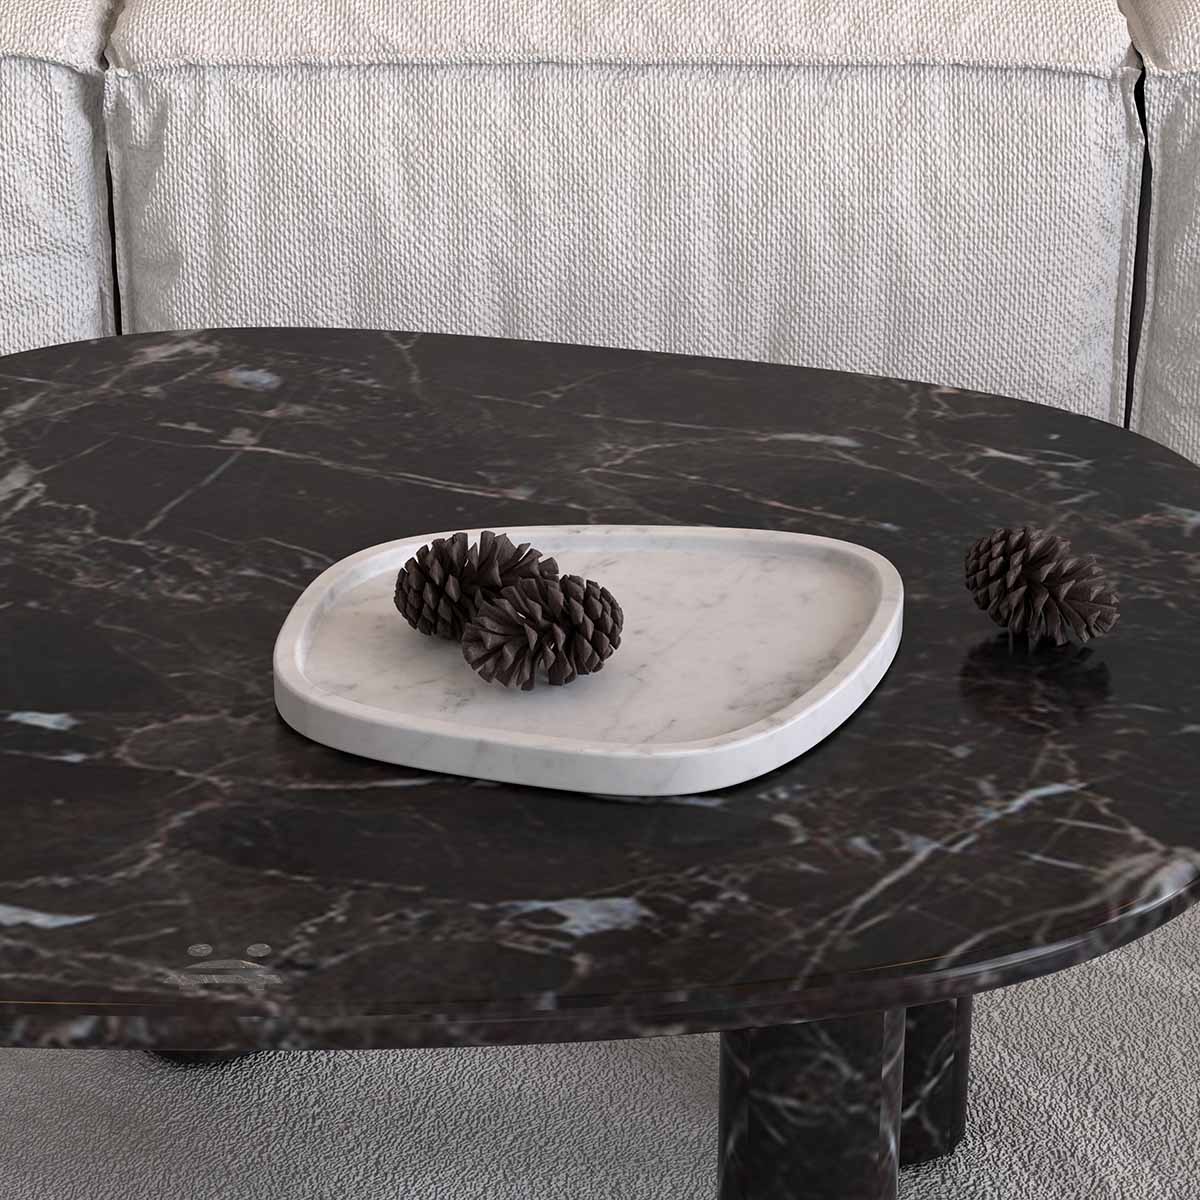 OIXDESIGN ZenPebble Decorative Tray, Italian Carrara Marble, Back View